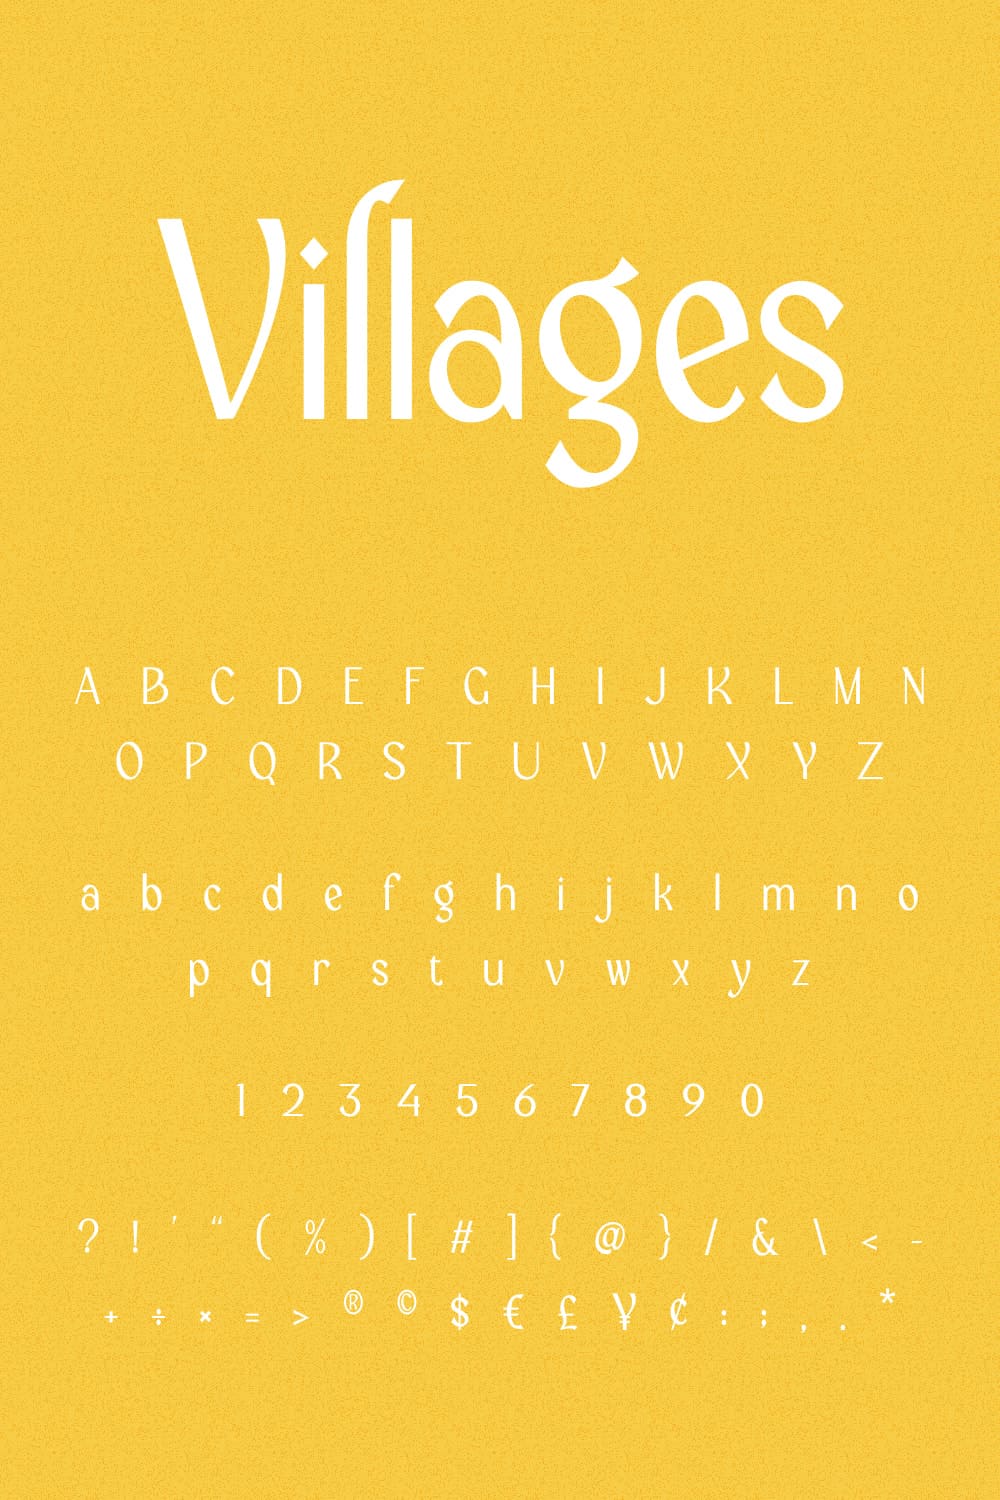 Villages Free Farmhouse Font Pinterest preview by MasterBundles.